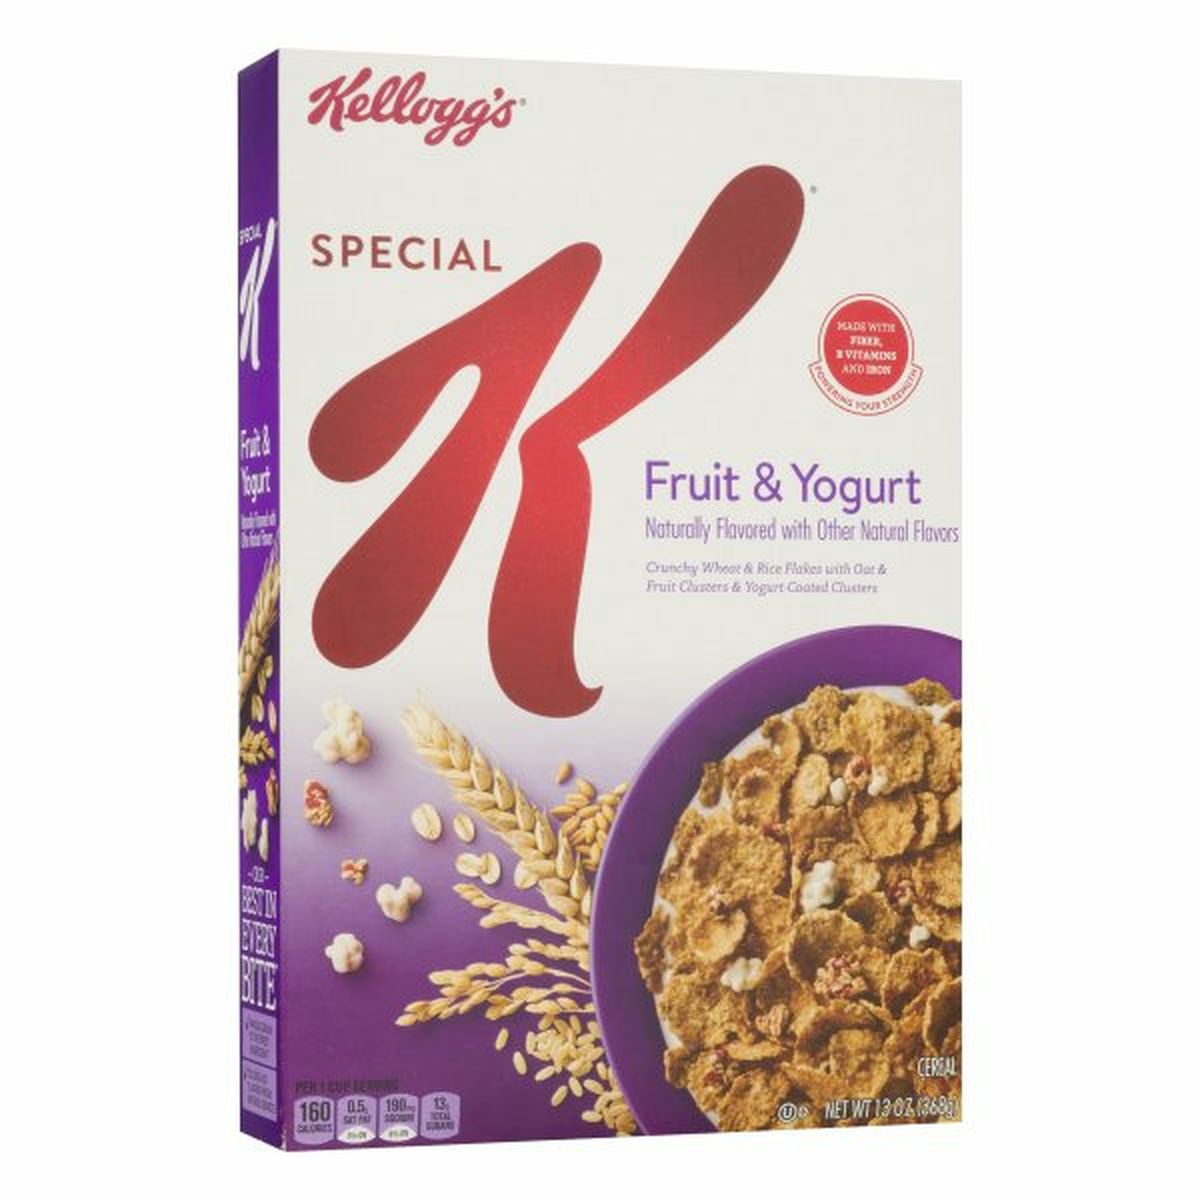 Calories in Kellogg's Special K Special K Cereal, Fruit & Yogurt